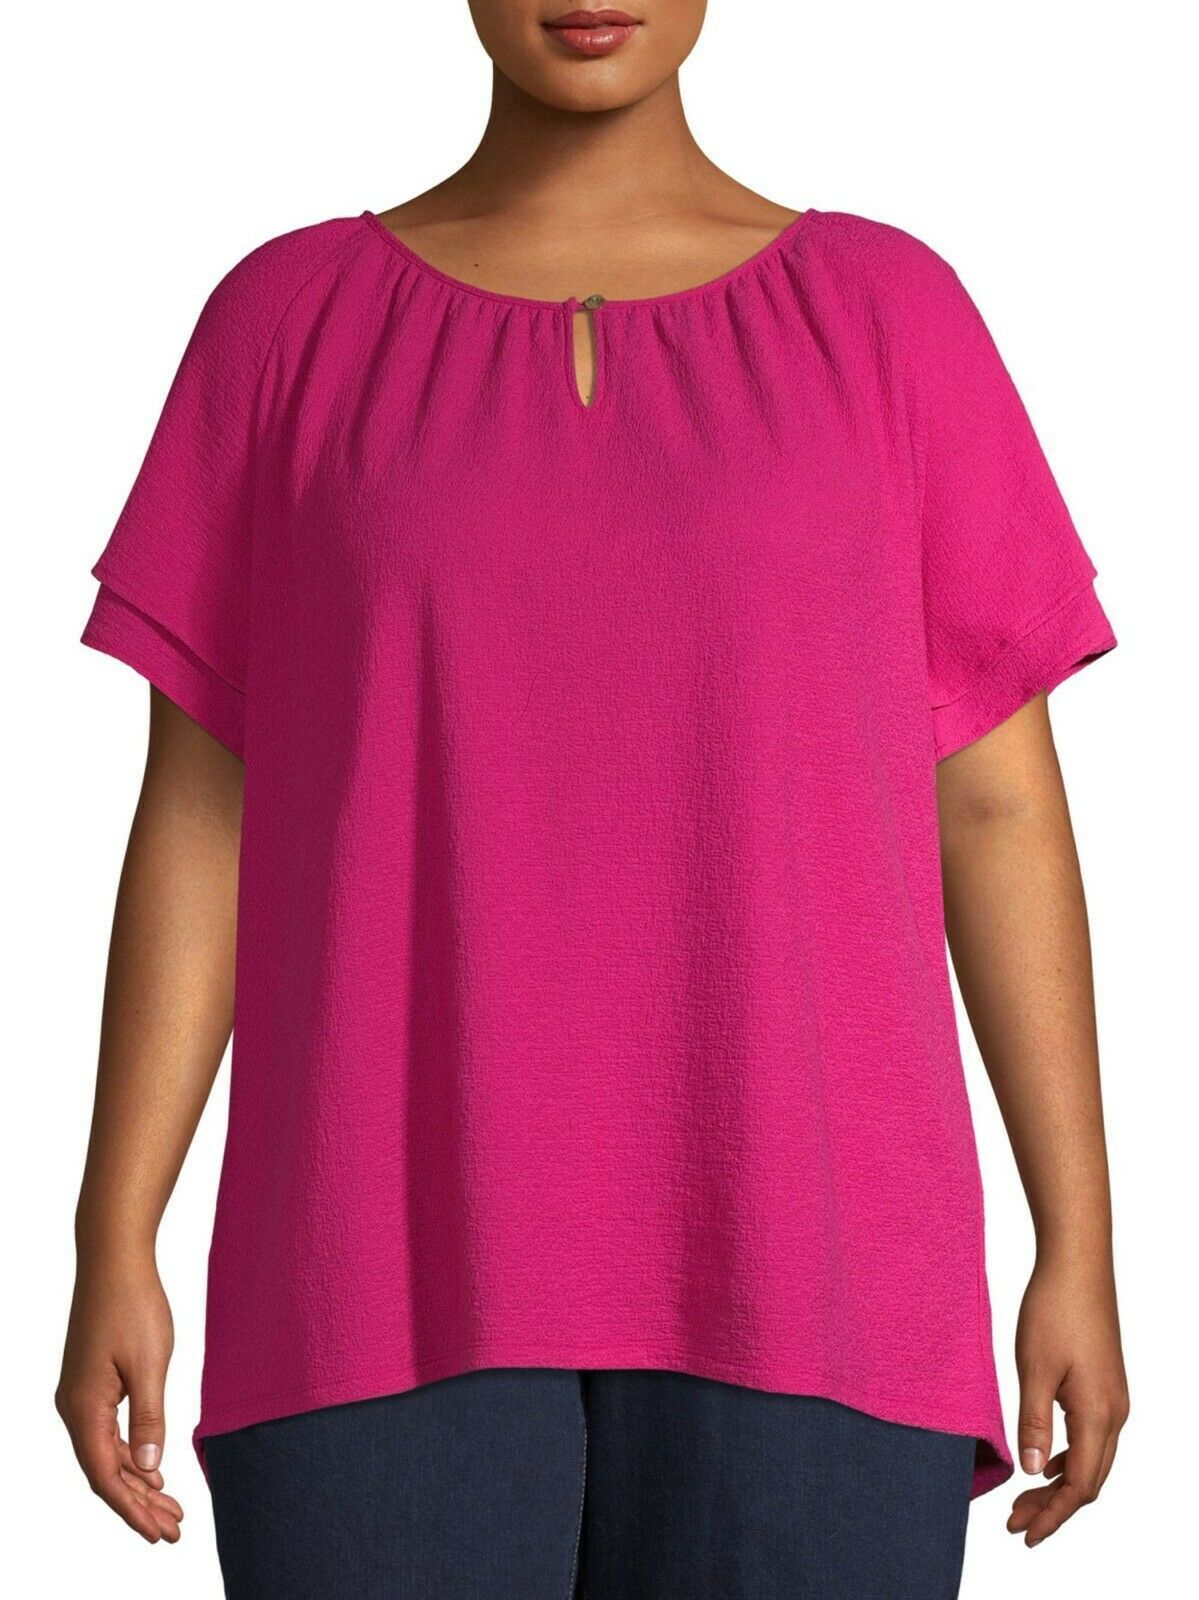 Terra & Sky Women's Plus Textured Ruffle Sleeve Peasant Top 0X (14W) Pink